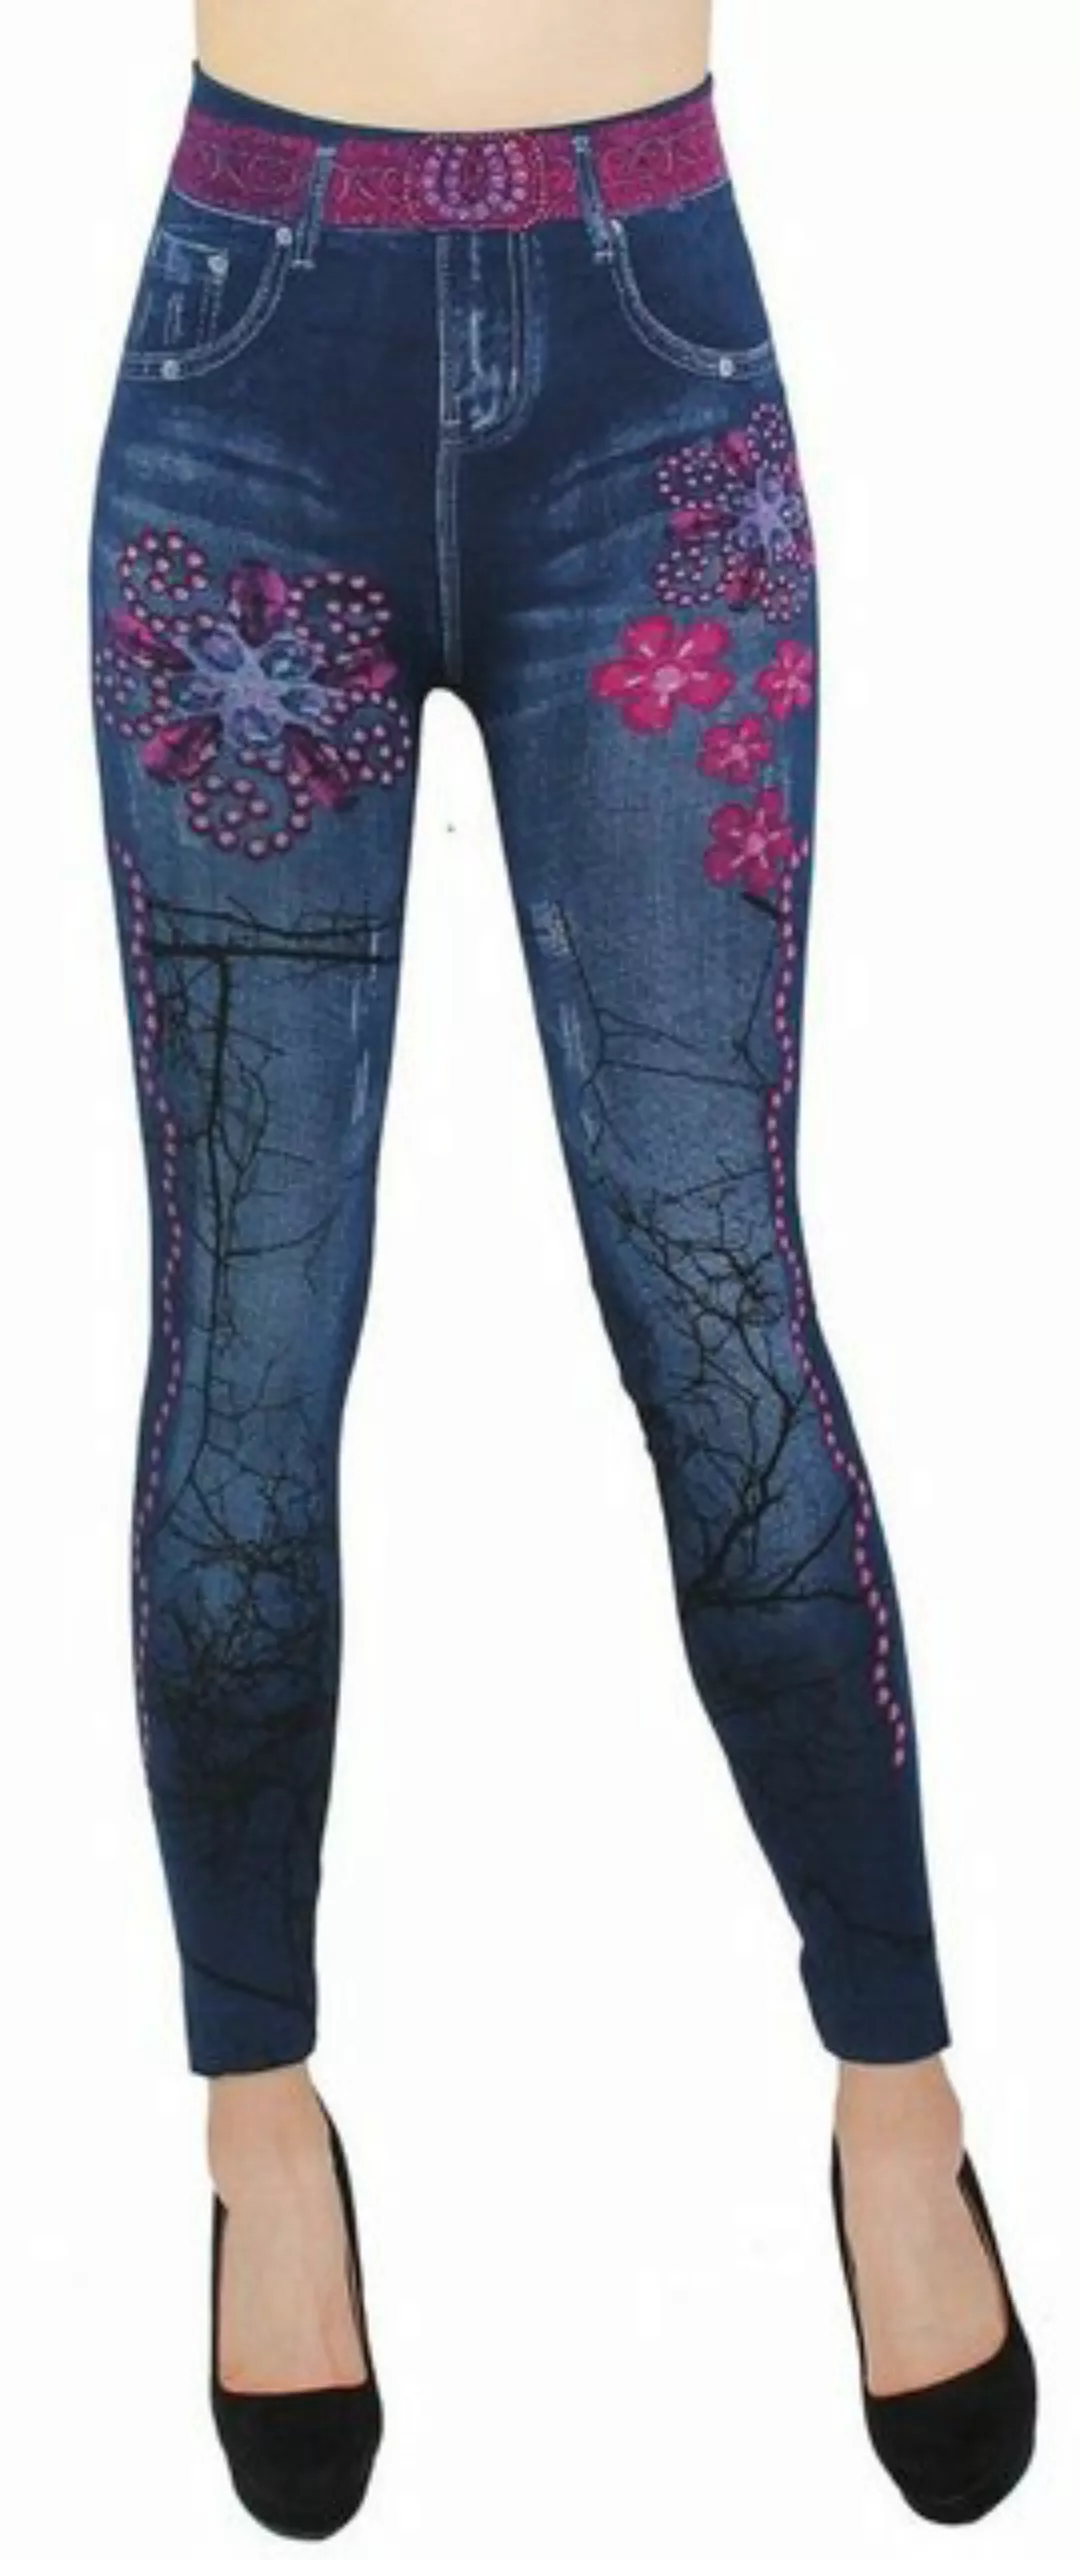 dy_mode Jeggings Damen Leggings in Jeans Optik High Waist Jeggings Jeansleg günstig online kaufen